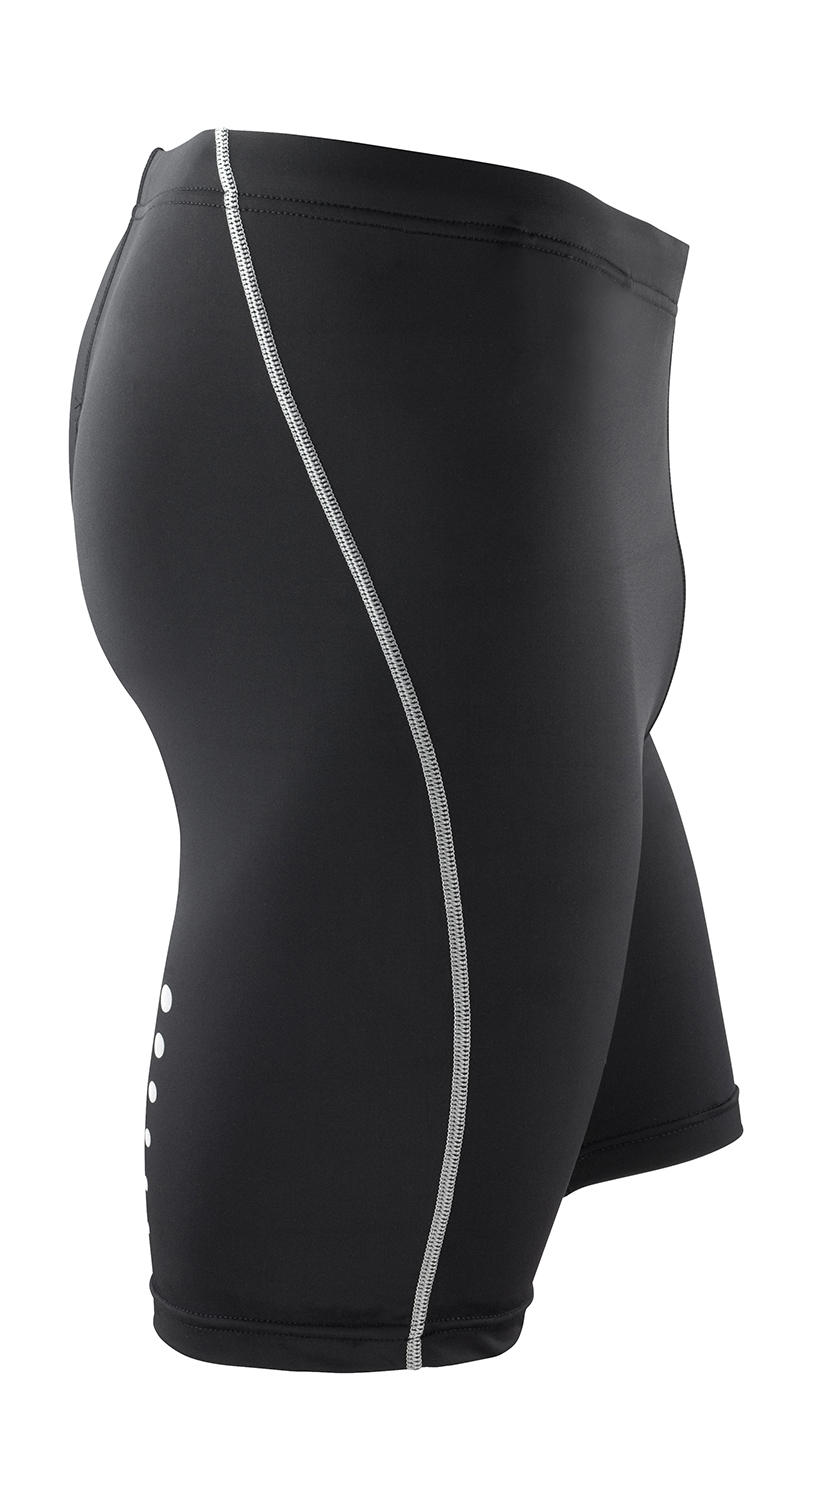  Mens Bodyfit Base Layer Shorts in Farbe Black